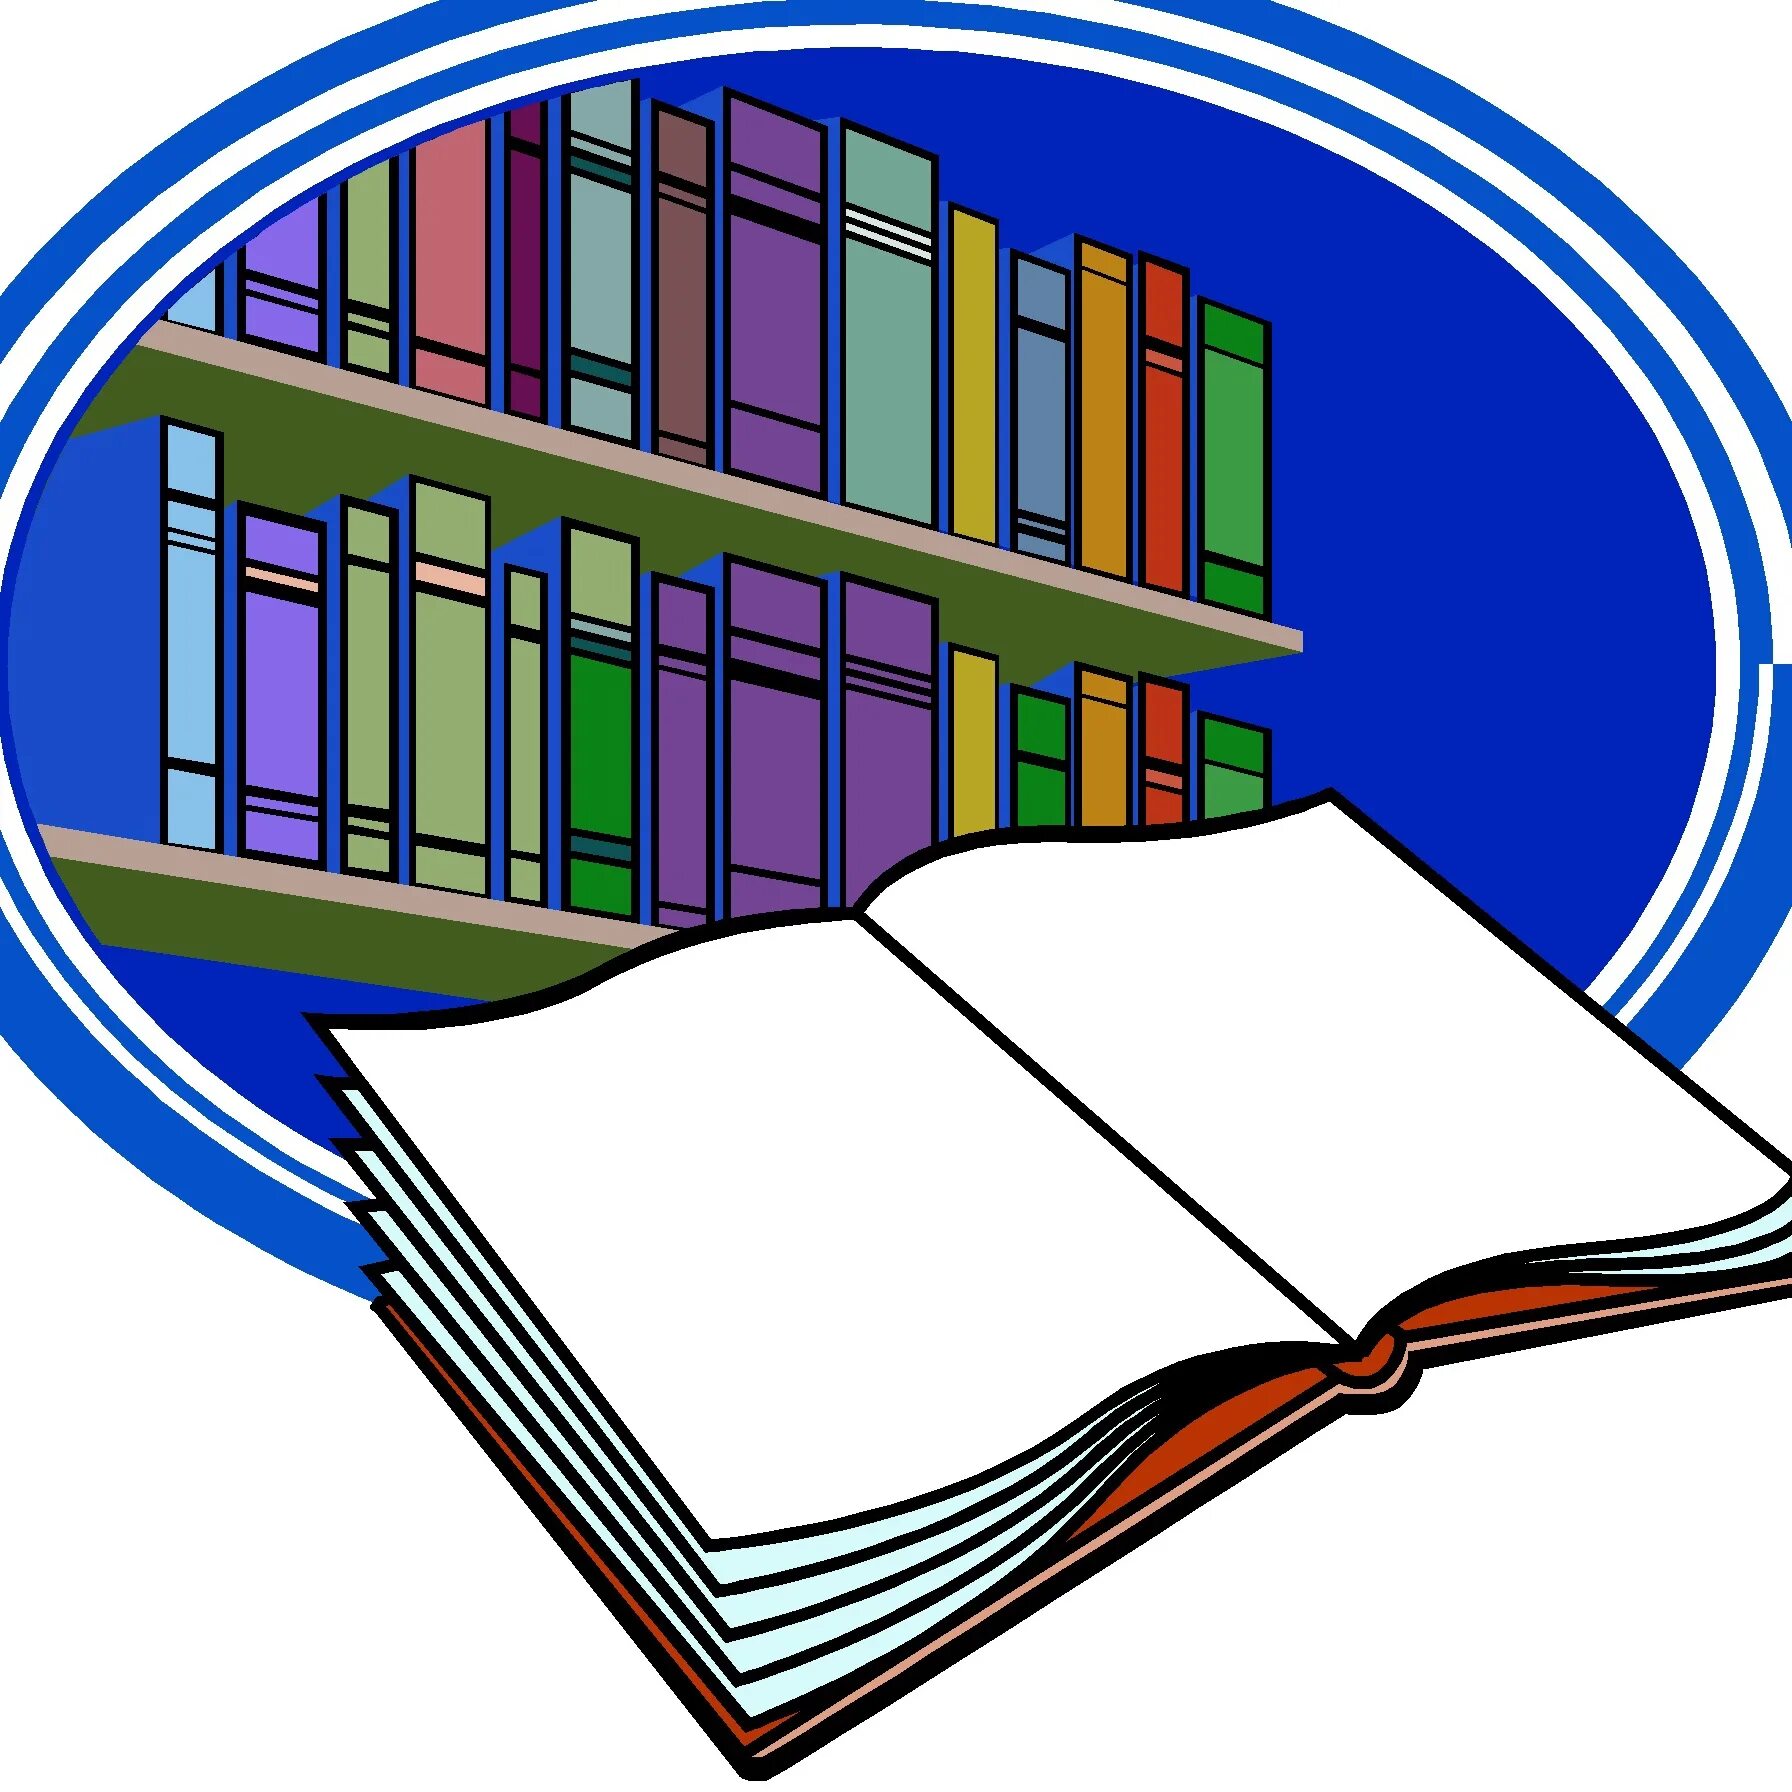 Логотип библиотеки. Библиотека картинки. Библиотека иллюстрация. Логотип школьной библиотеки. Сайт библиотеки информация